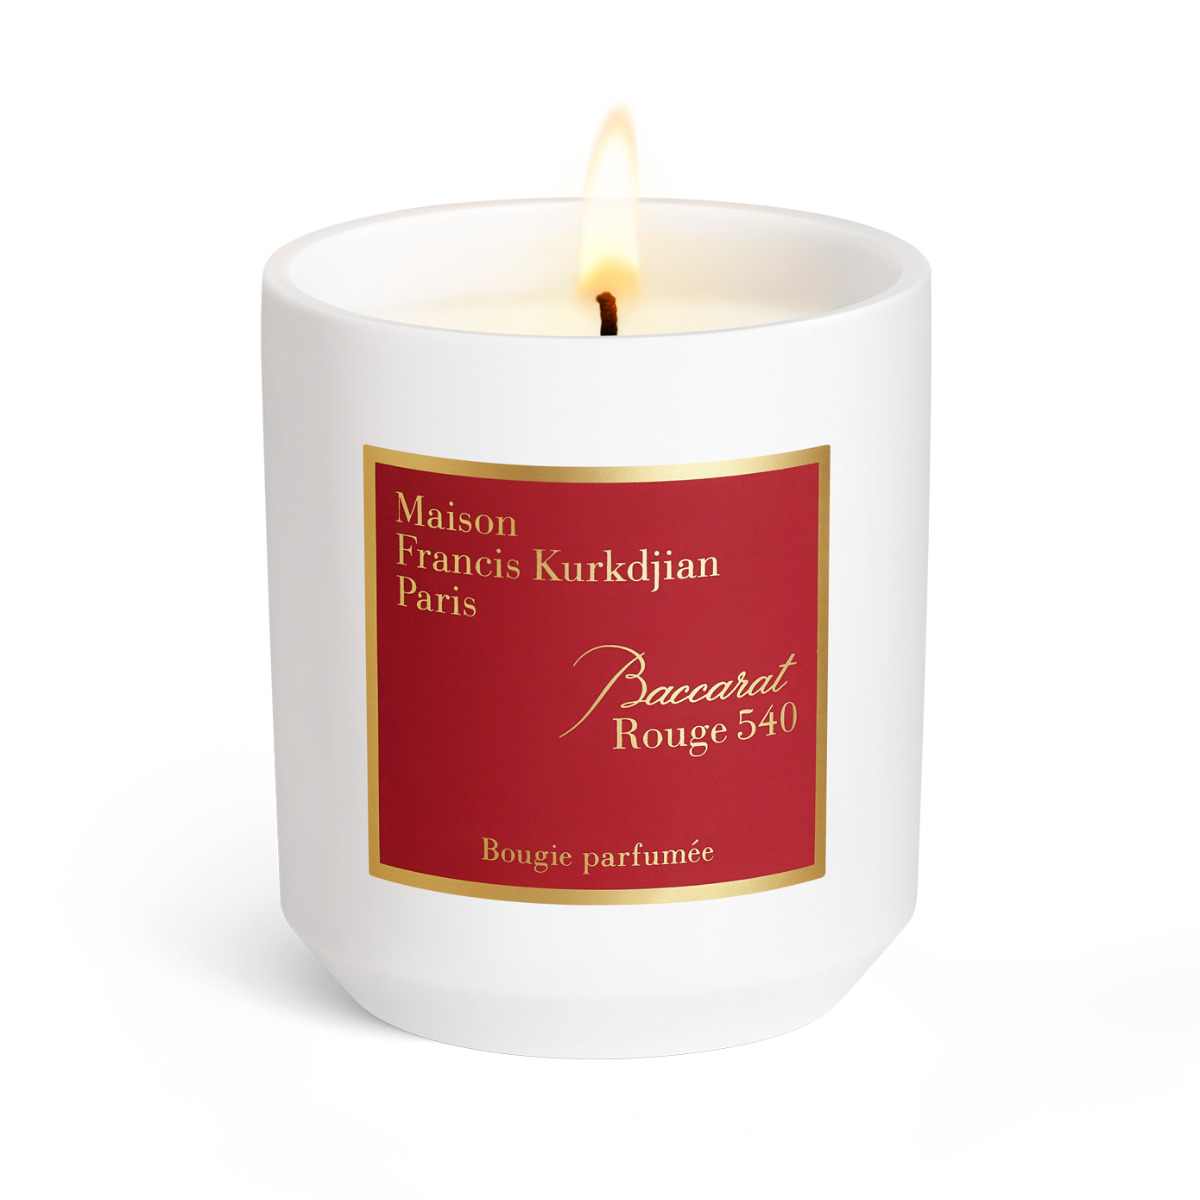 Maison Francis Kurkdjian Presents Its New Baccarat Rouge 540 Creations